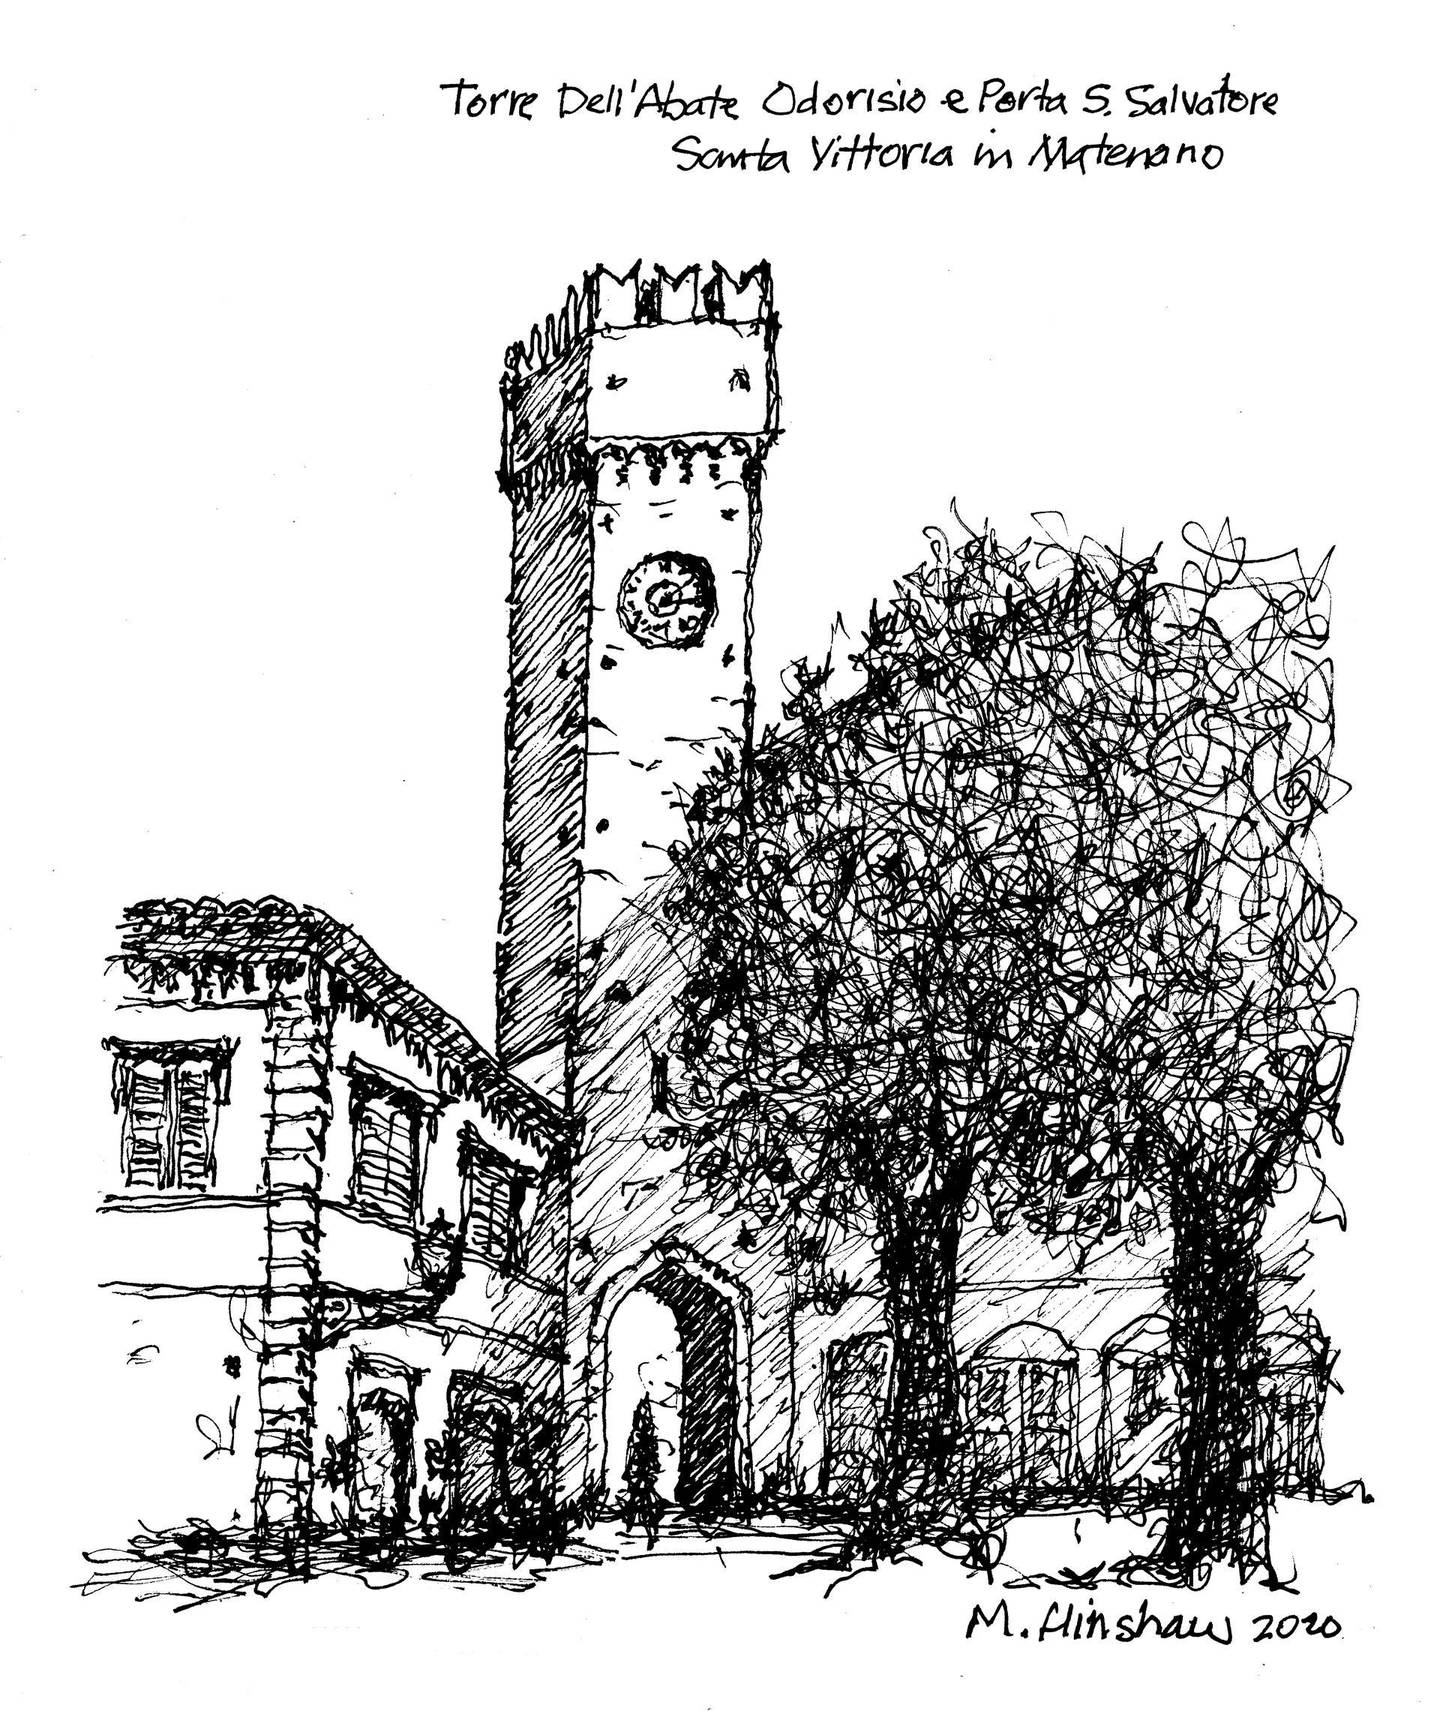 Illustration of Torre dell'abate in Santa Vittoria in Matenano. Credit: Mark Hinshaw